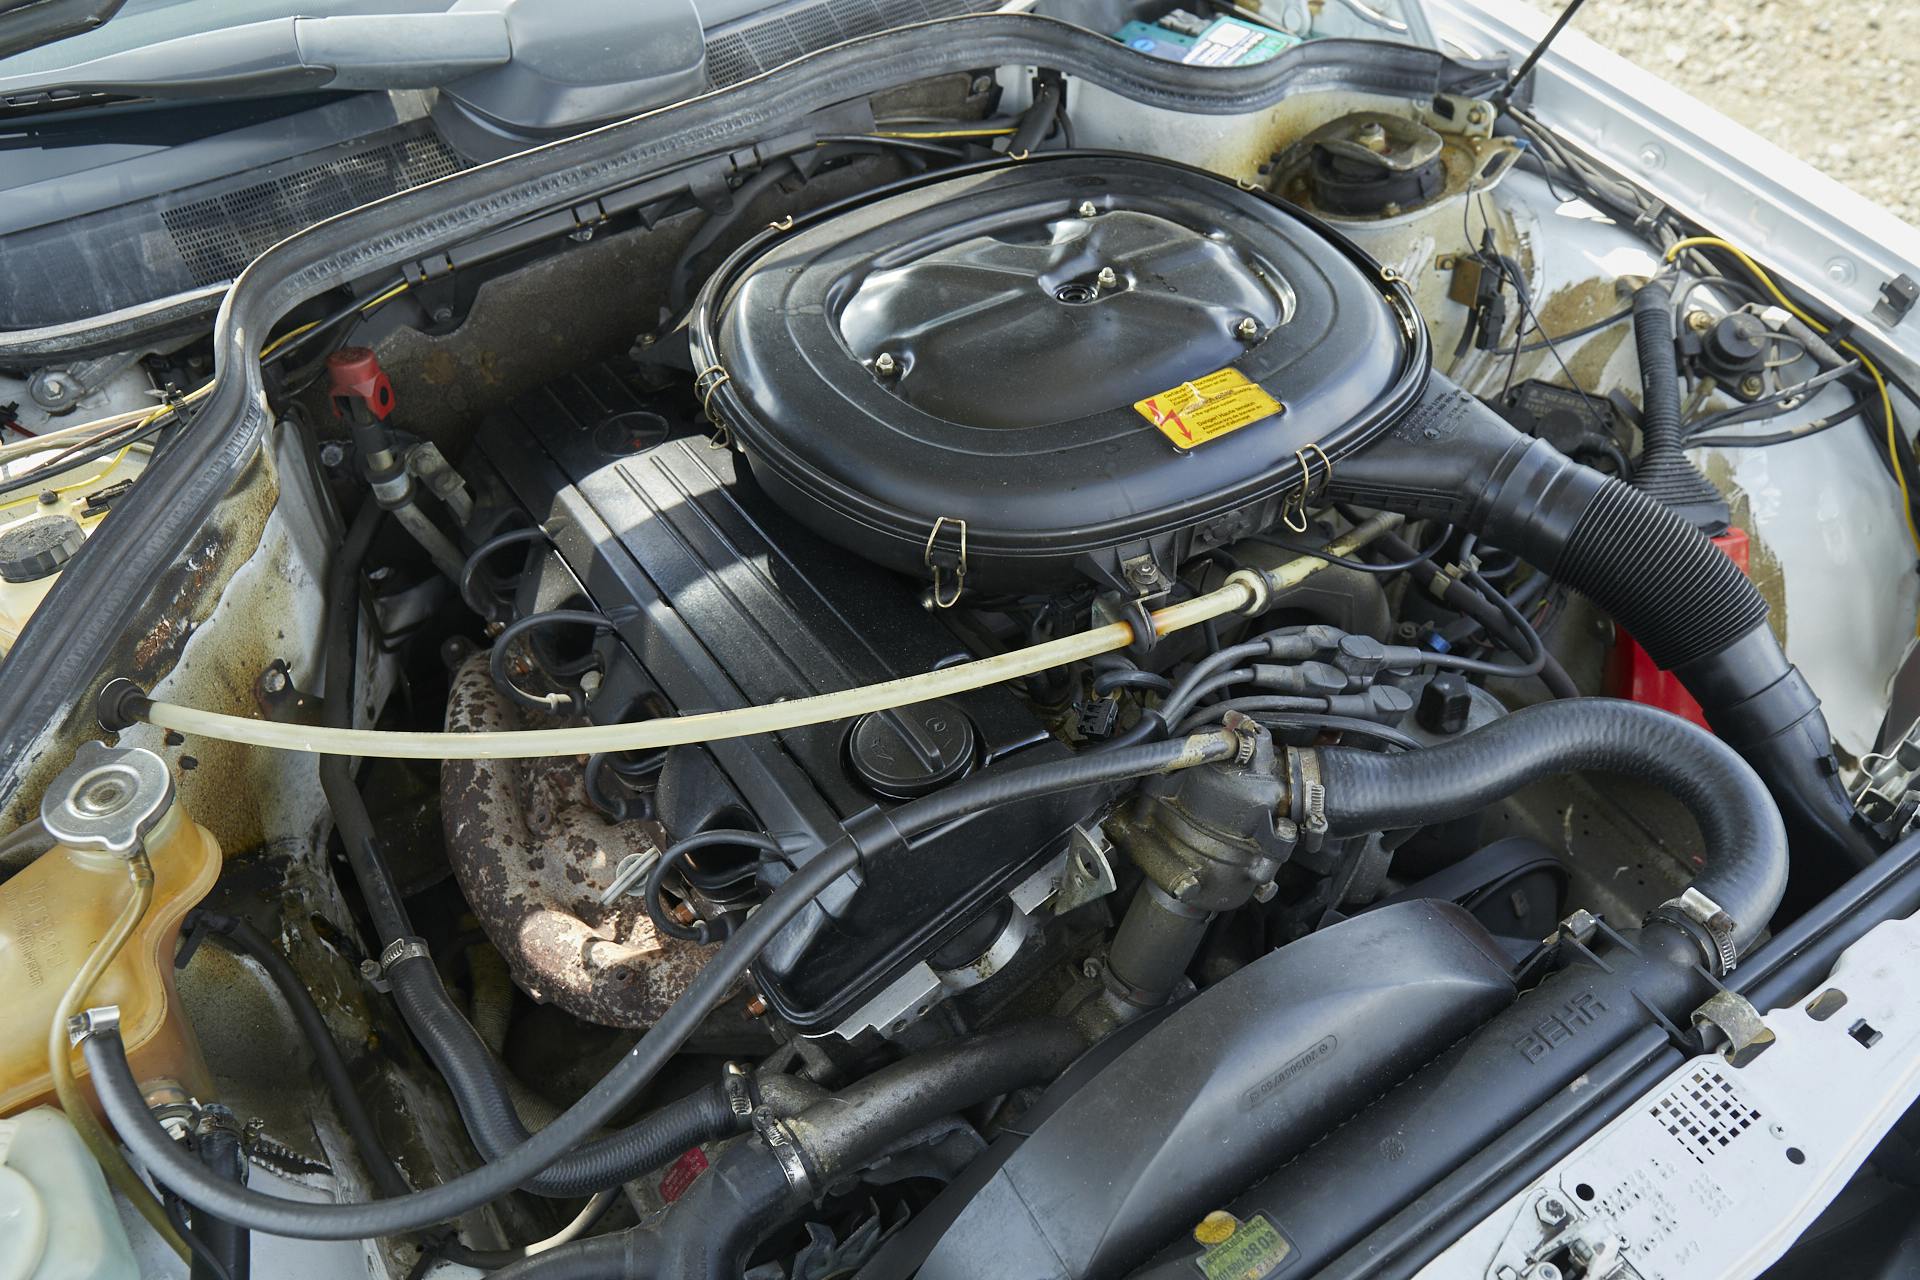 Mercedes 190E engine bay